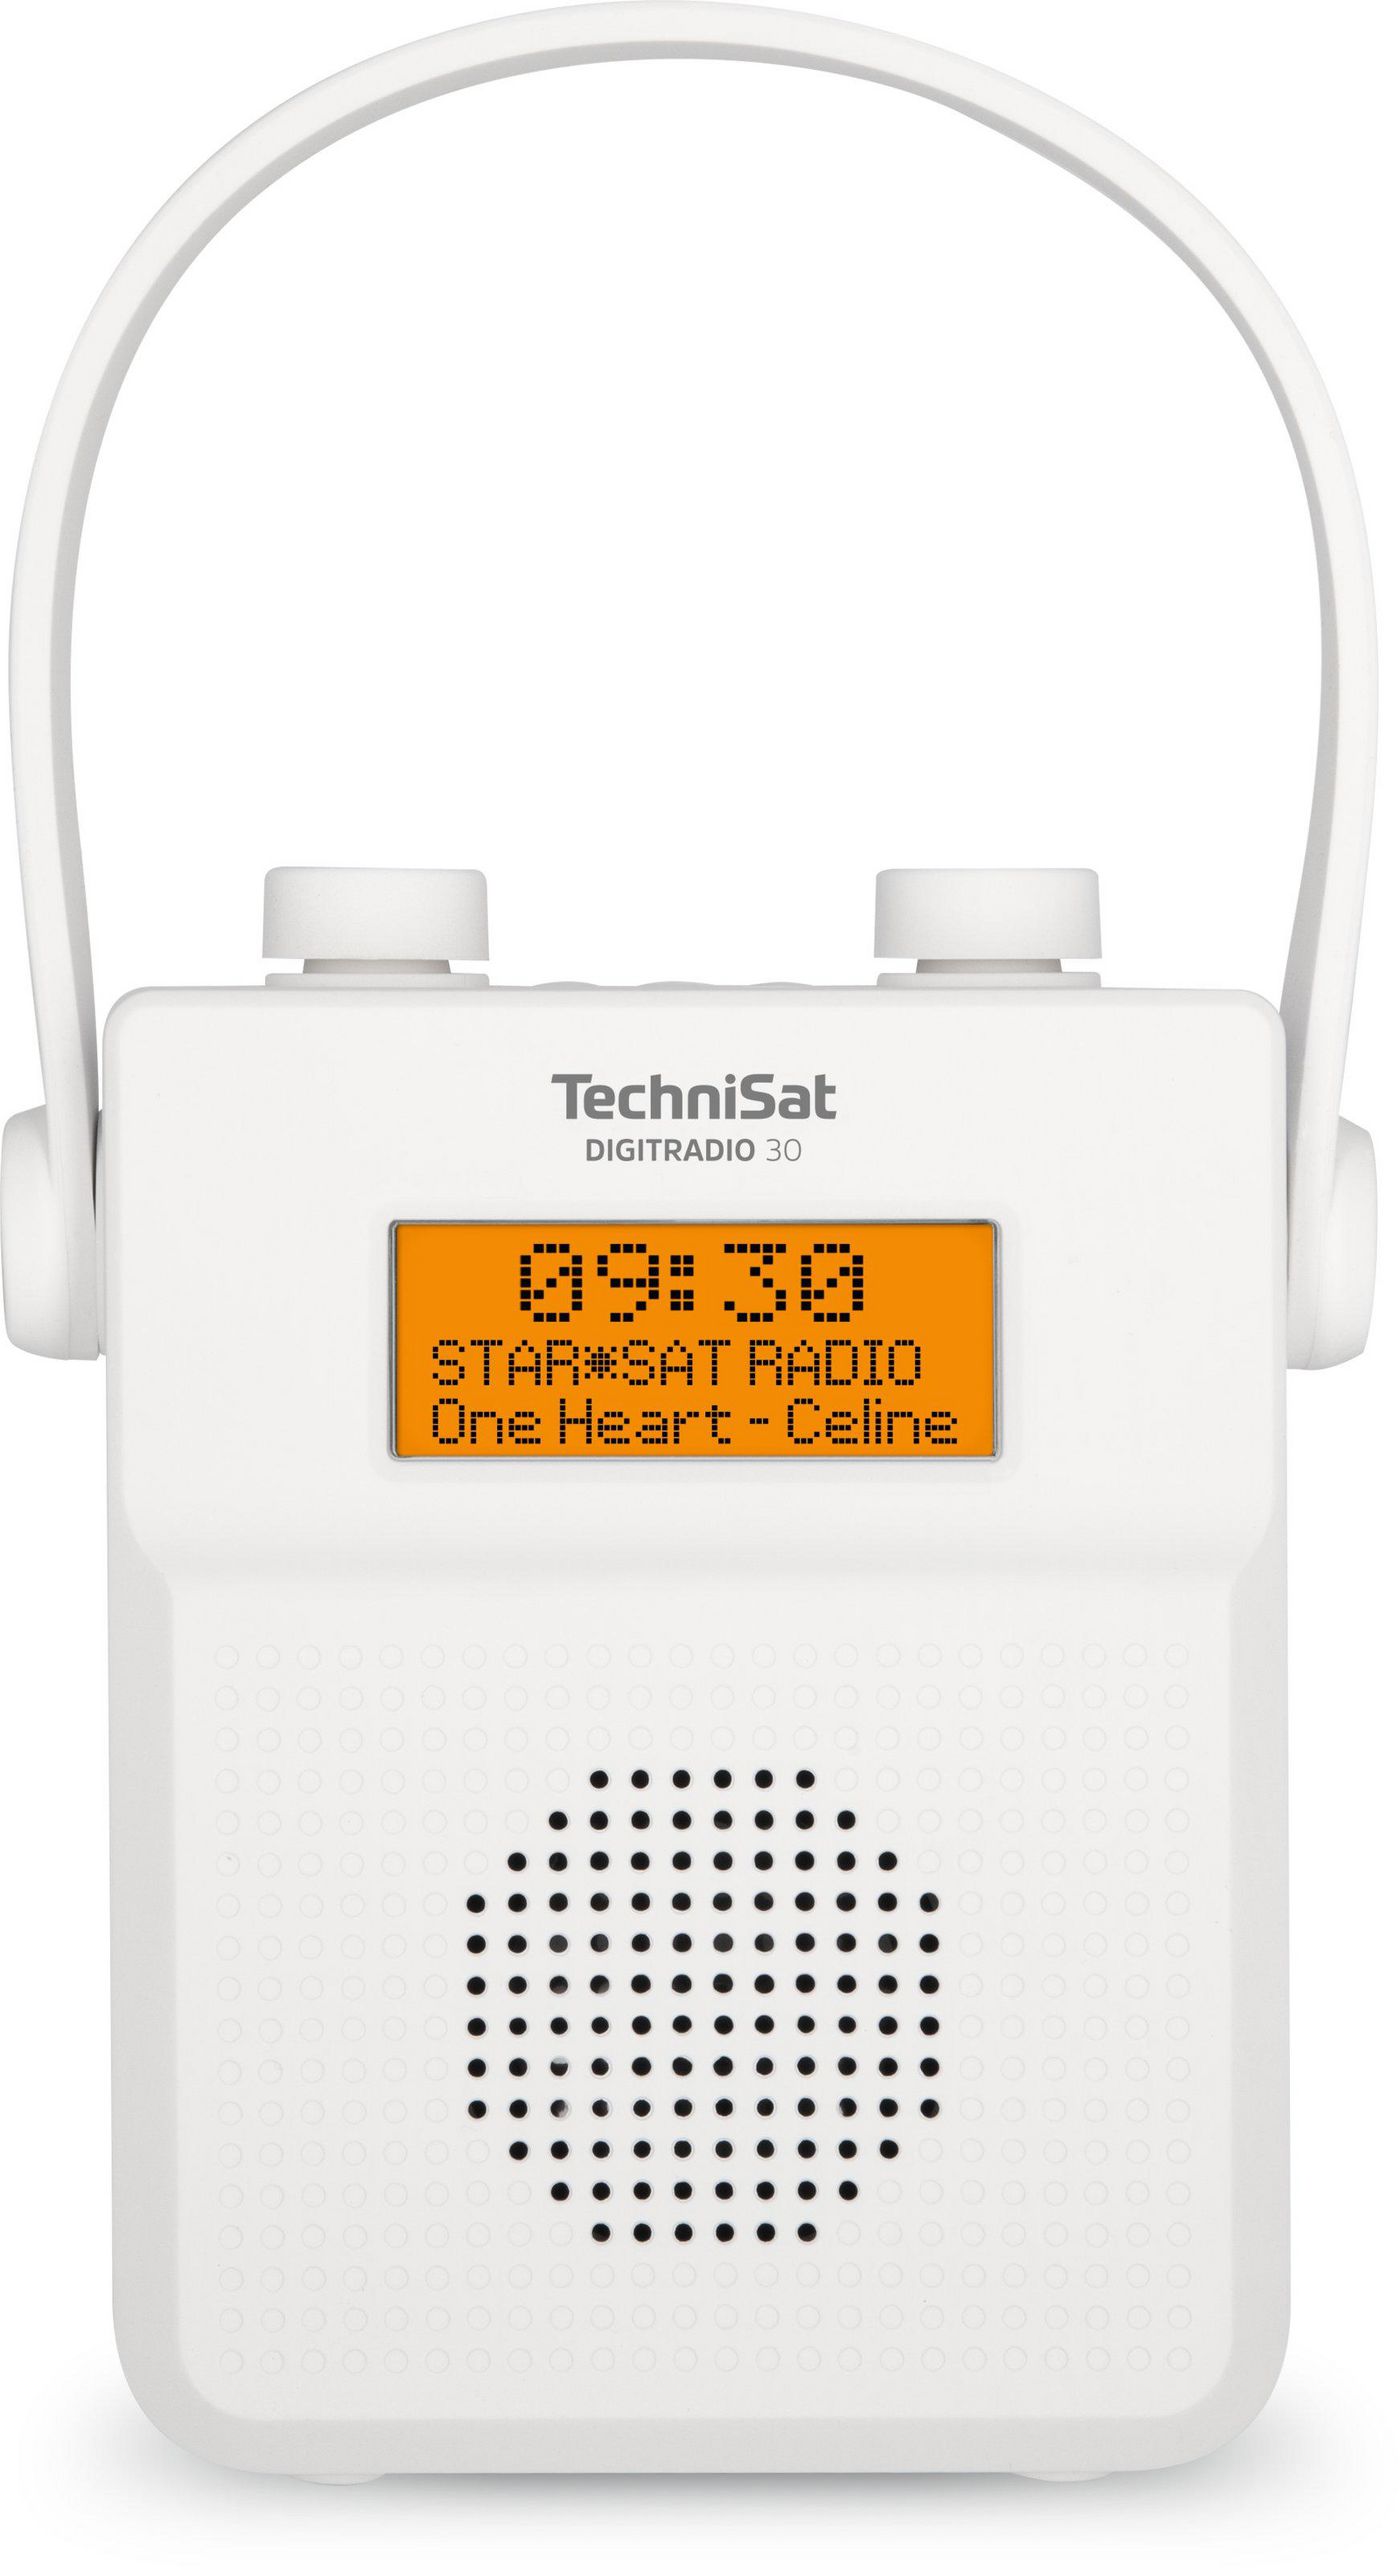 Technisat 00013955 W128262659 Digitradio 30 Portable Analog 